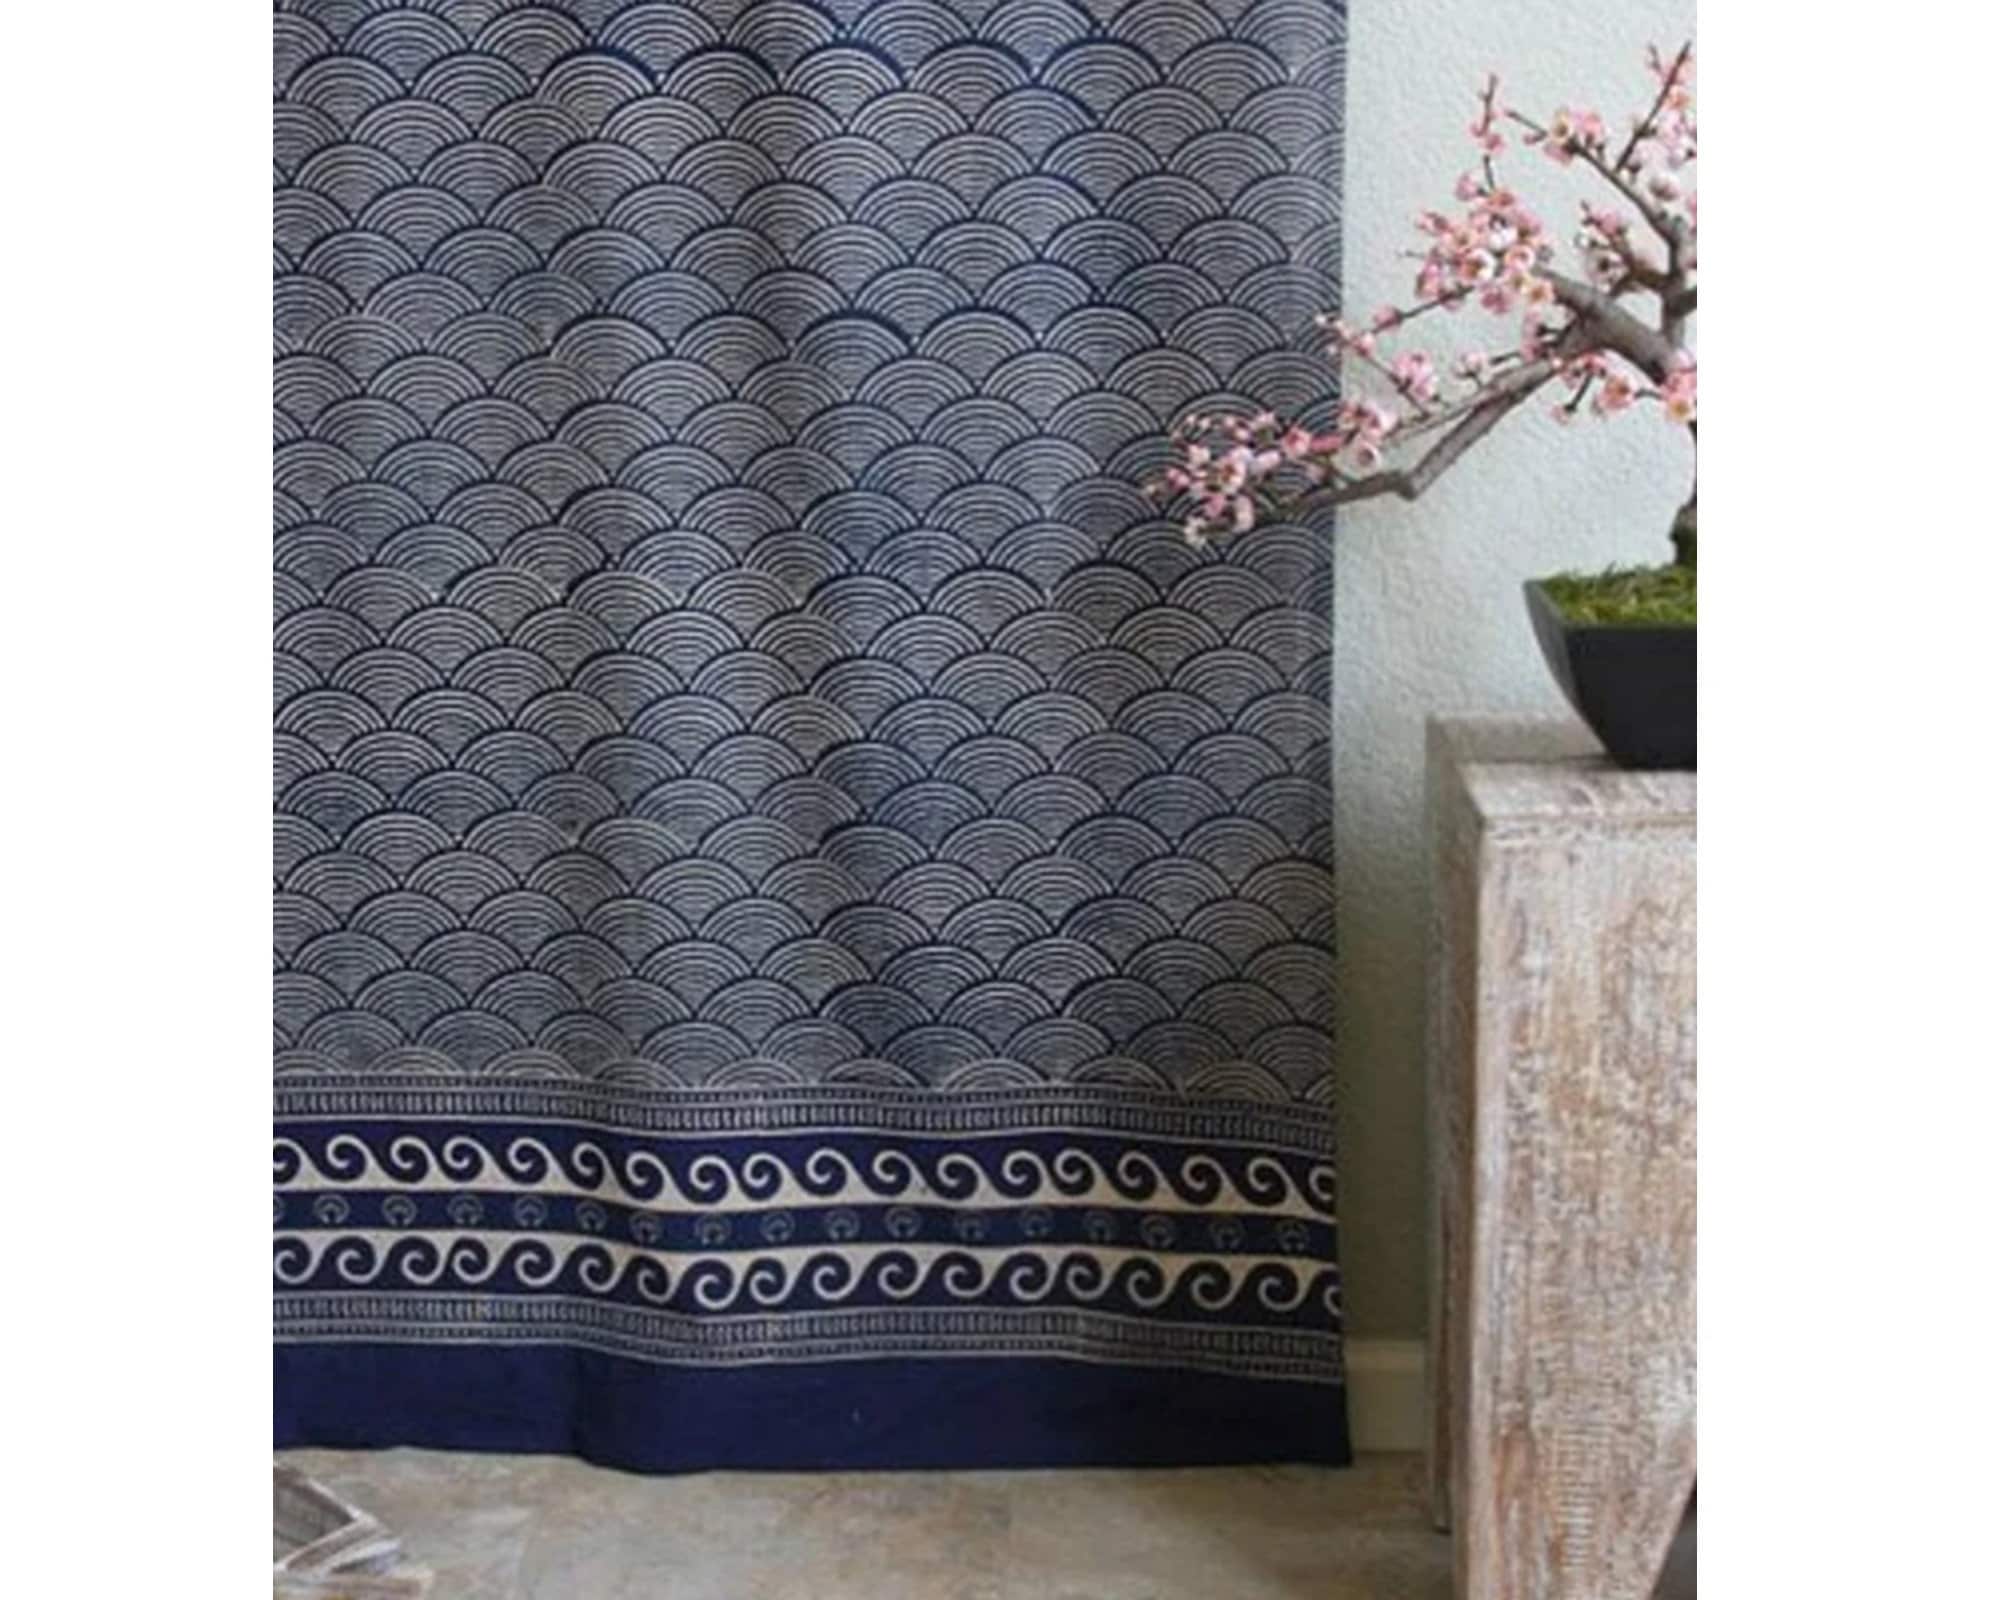 Geometric Pattern Shower Curtain Set Indian Bohemian Ethnic